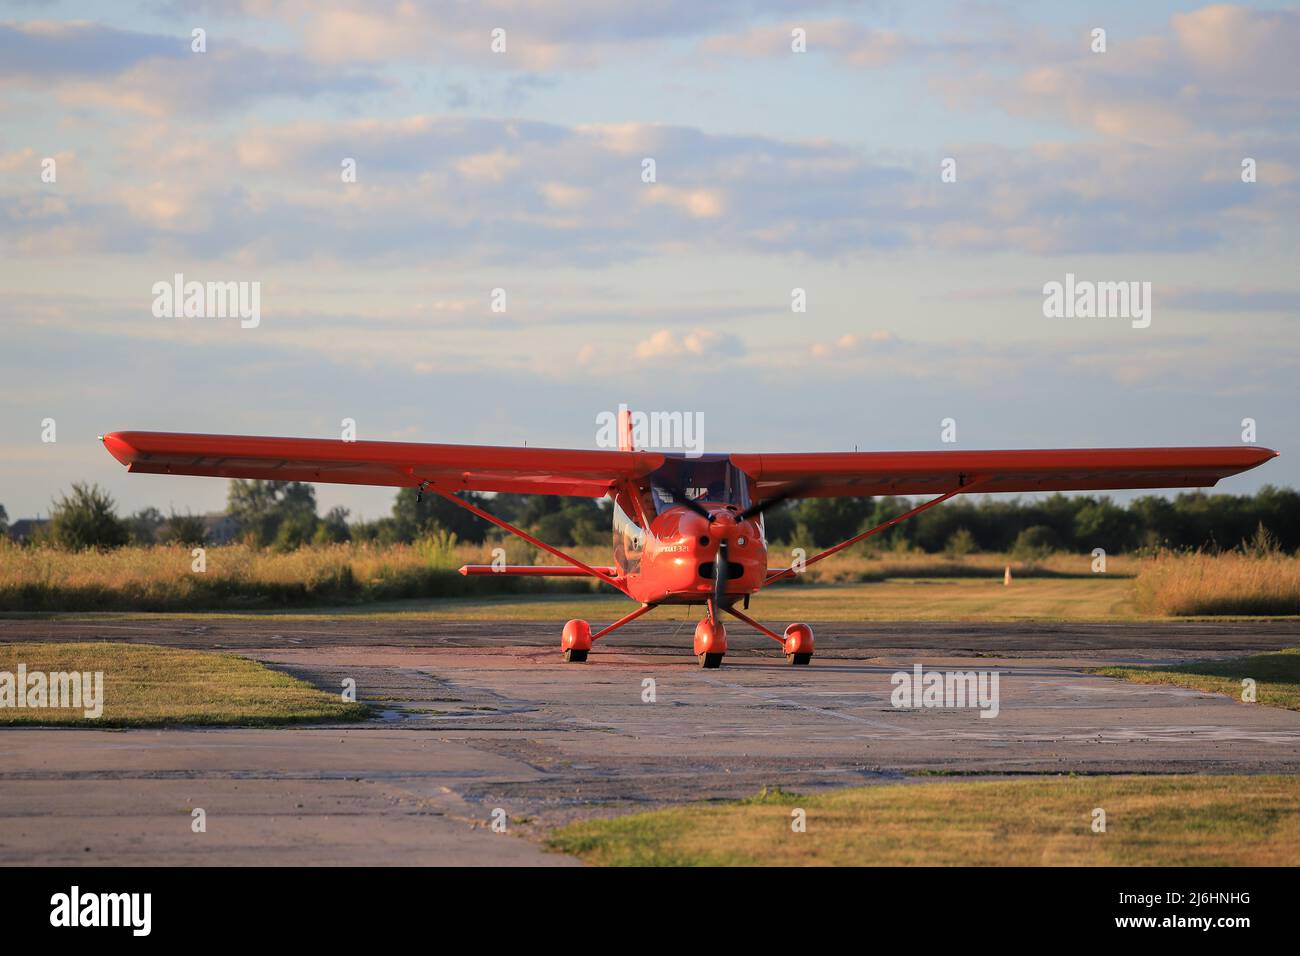 Private propeller plane Aeroprakt-32L on the runway Stock Photo